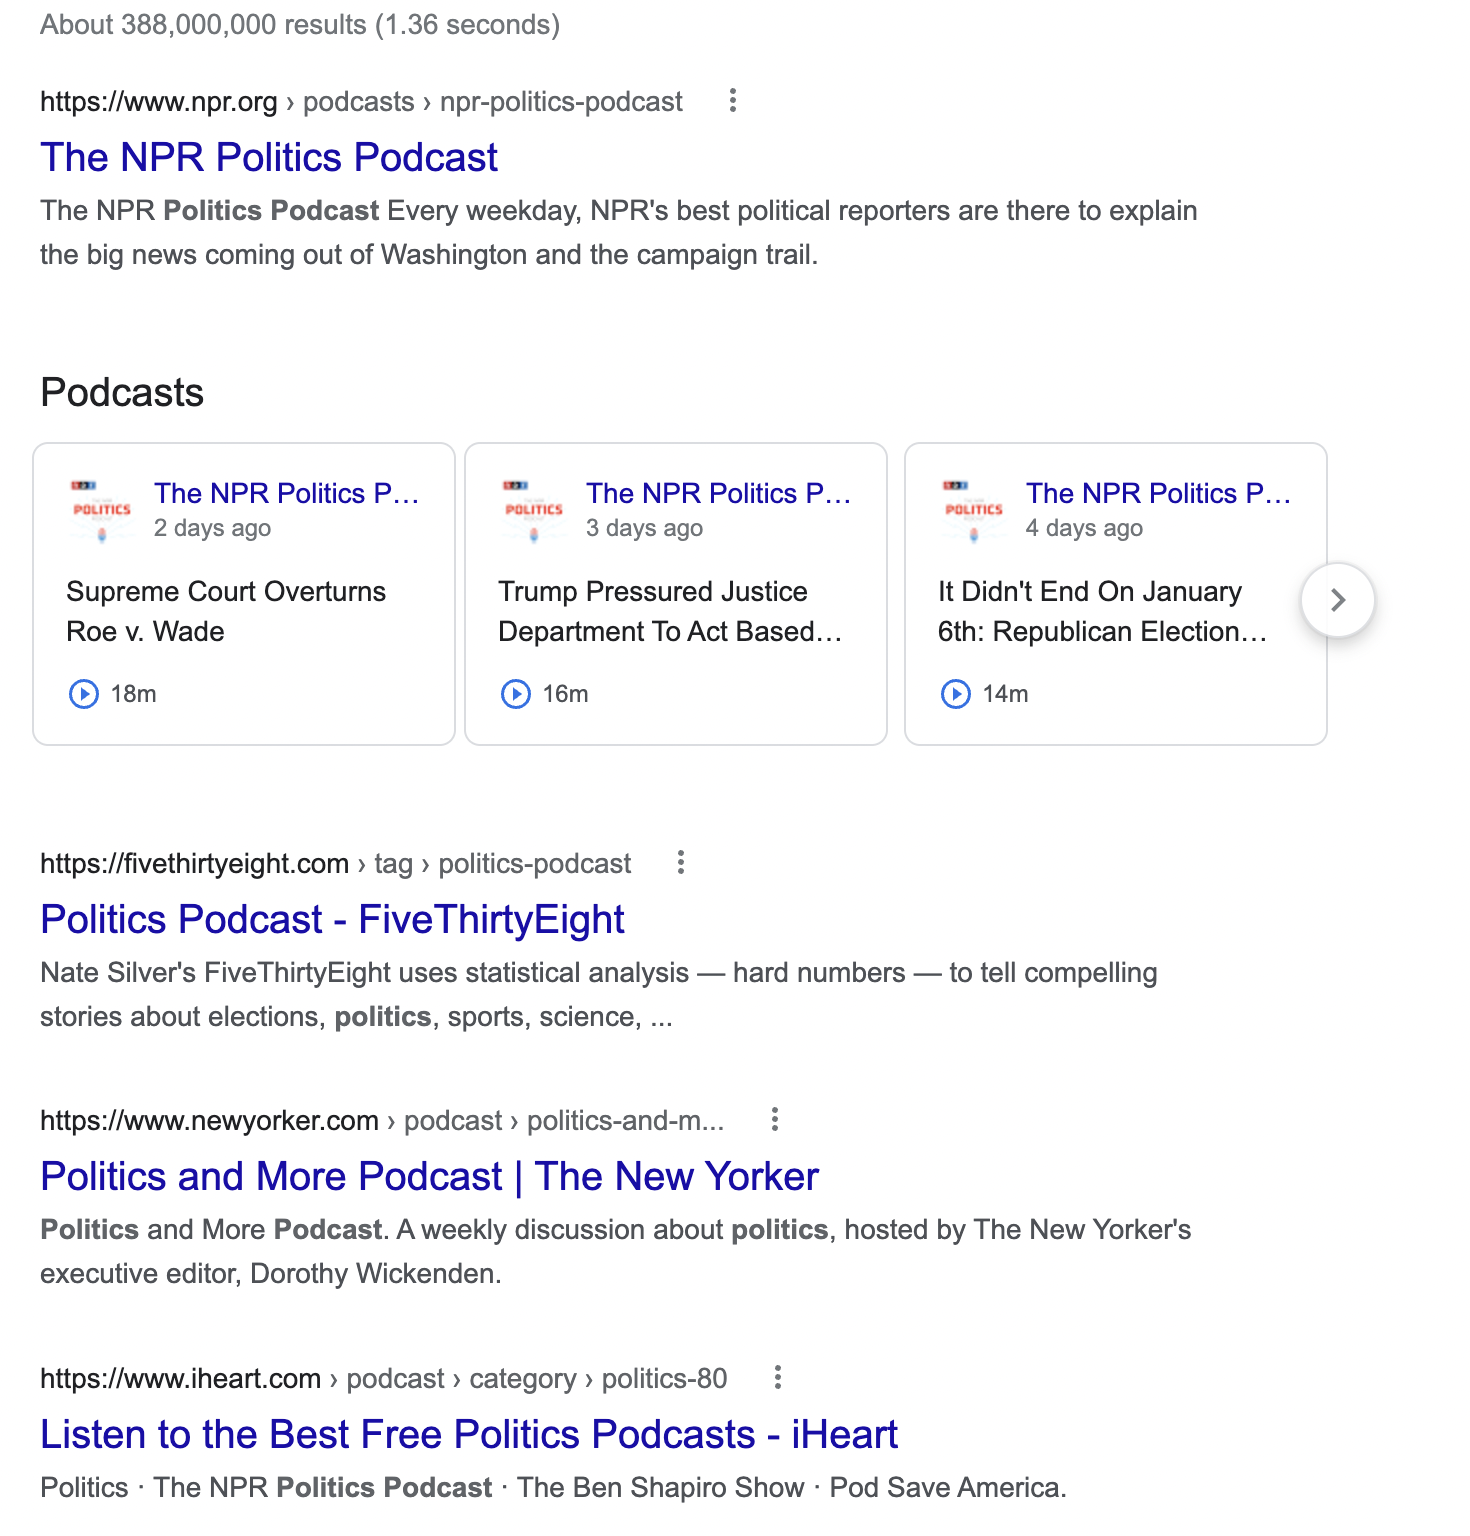 Google search results for “politics podcast”